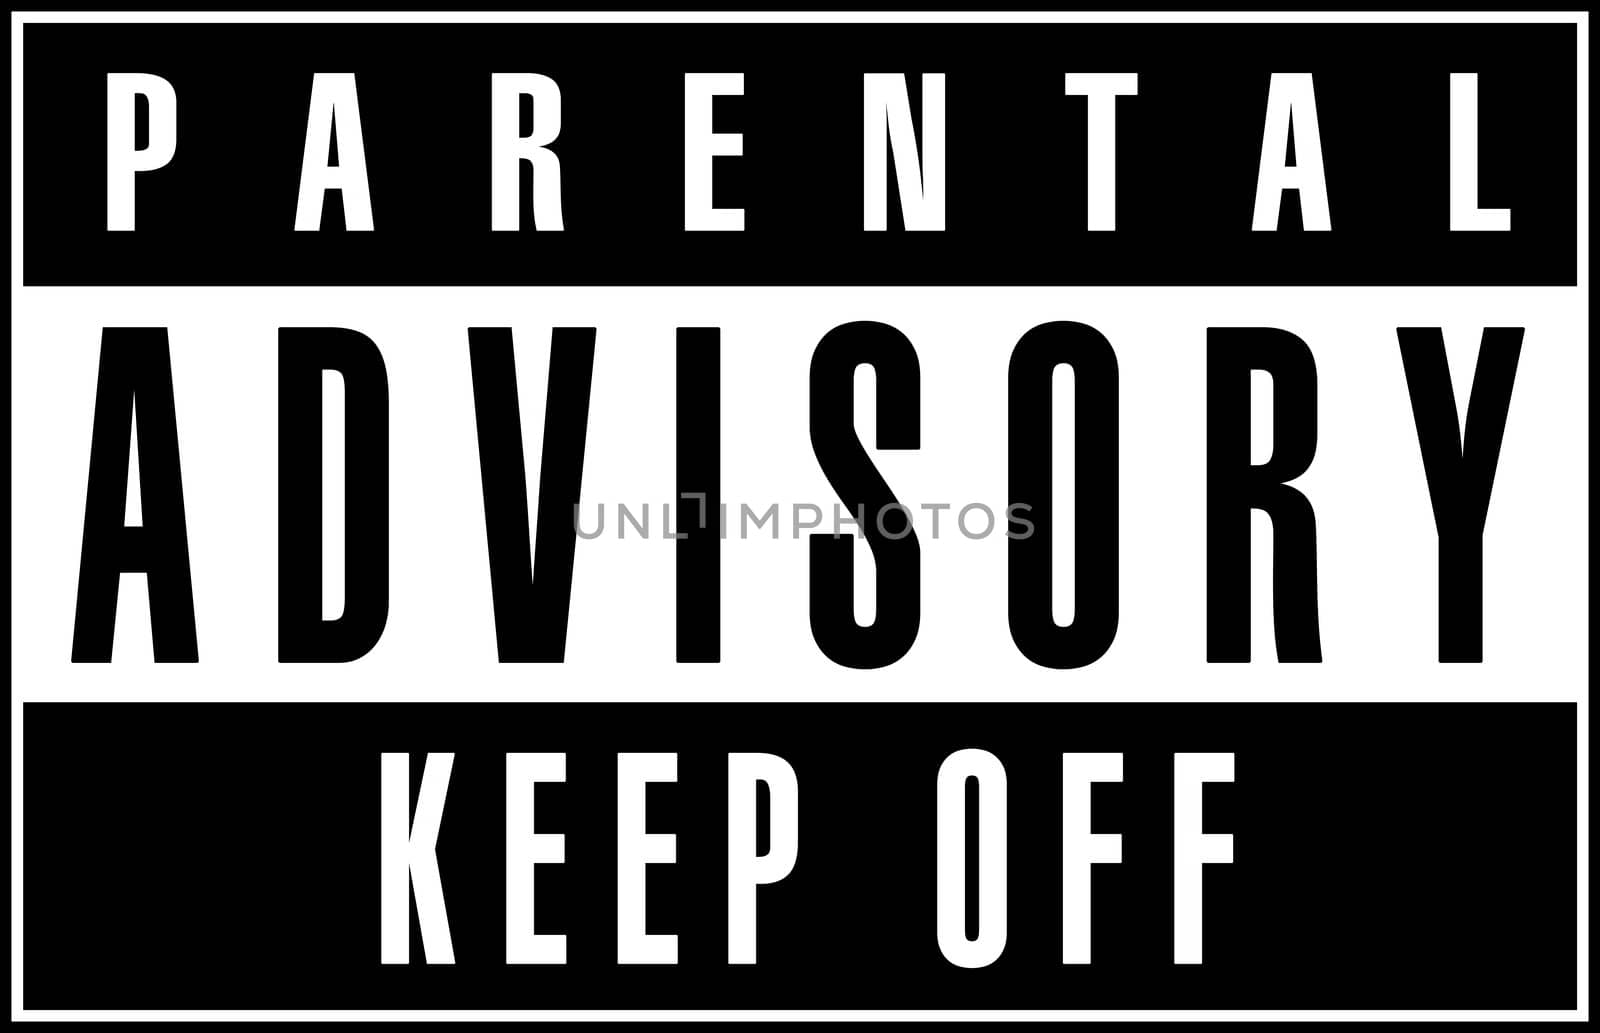 Parental advisory warning label by jeremywhat